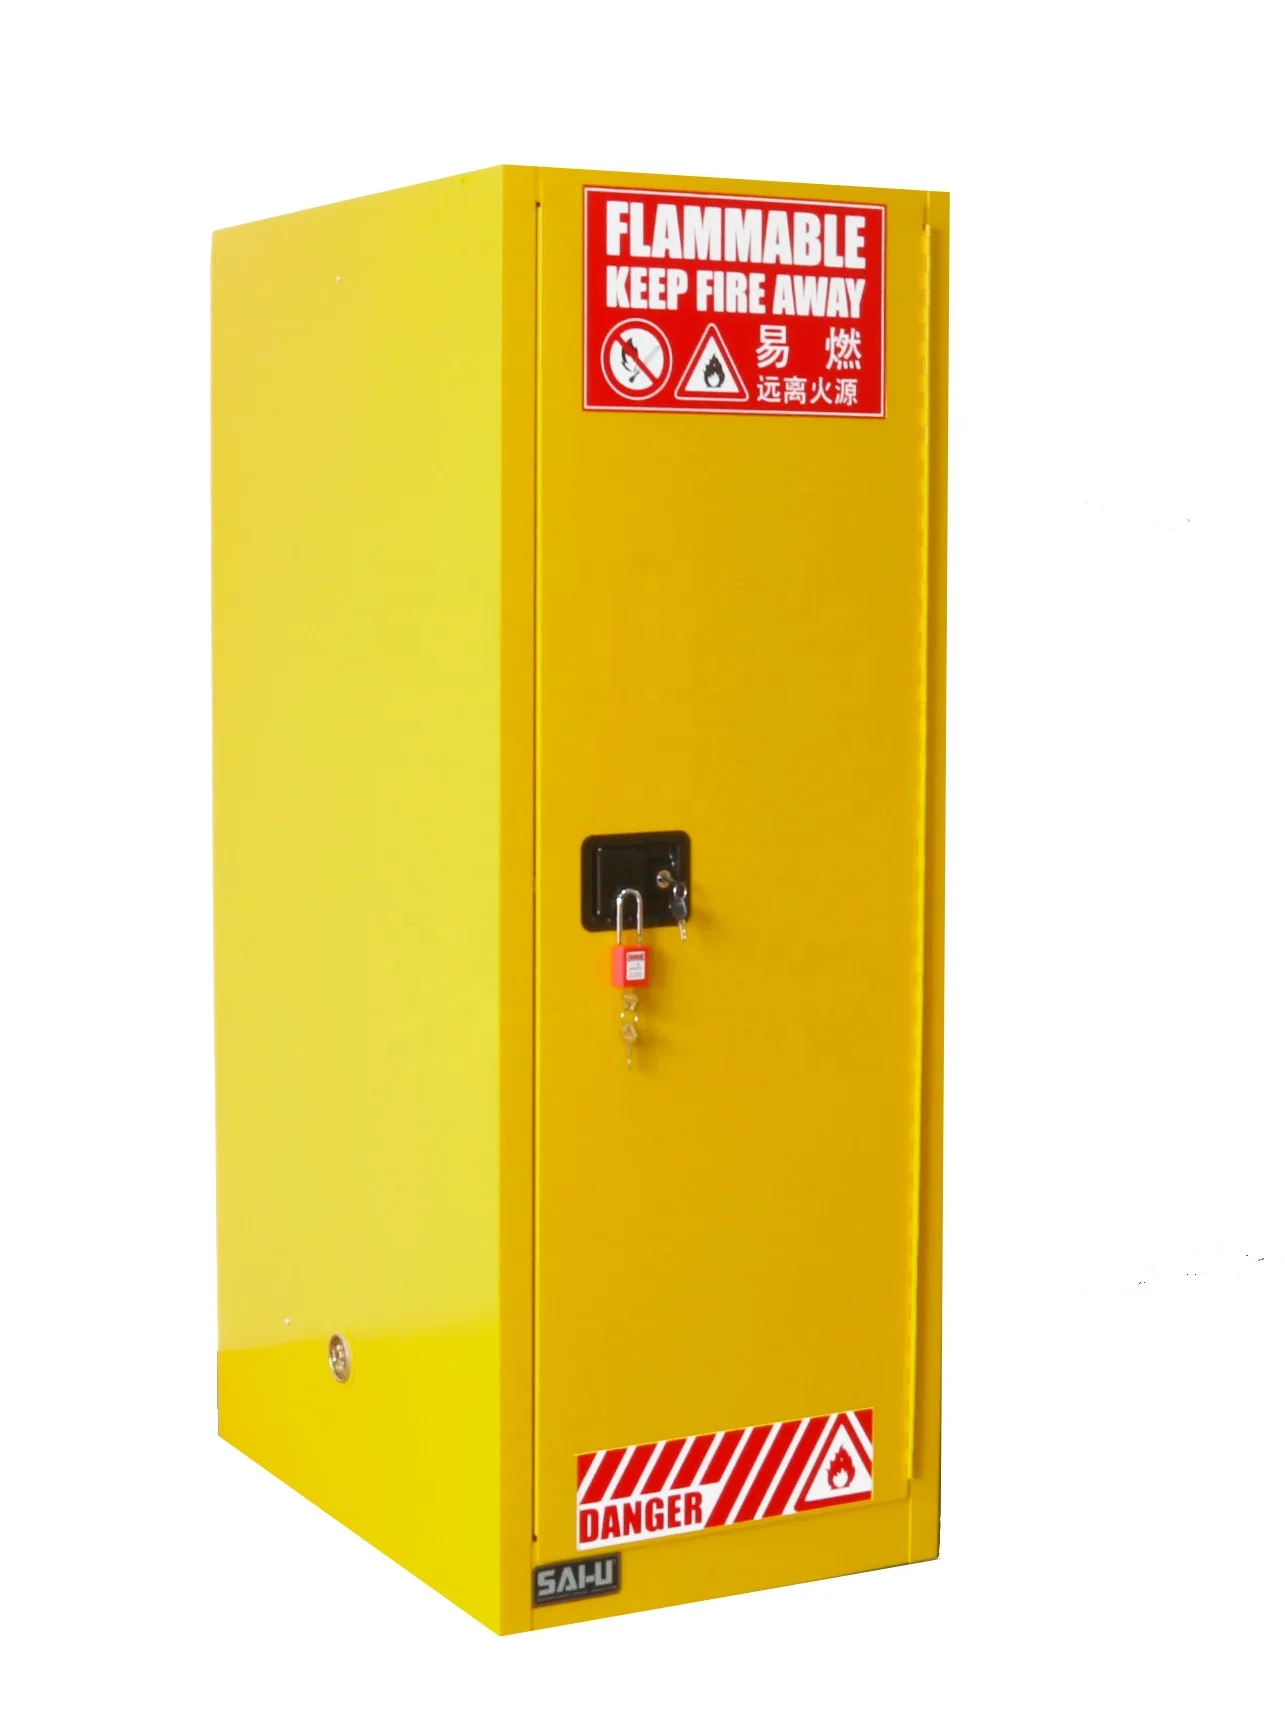 SAI-U Auto-door Self-closing door with FM Chemical Storage Safety Cabinet 54 Gal